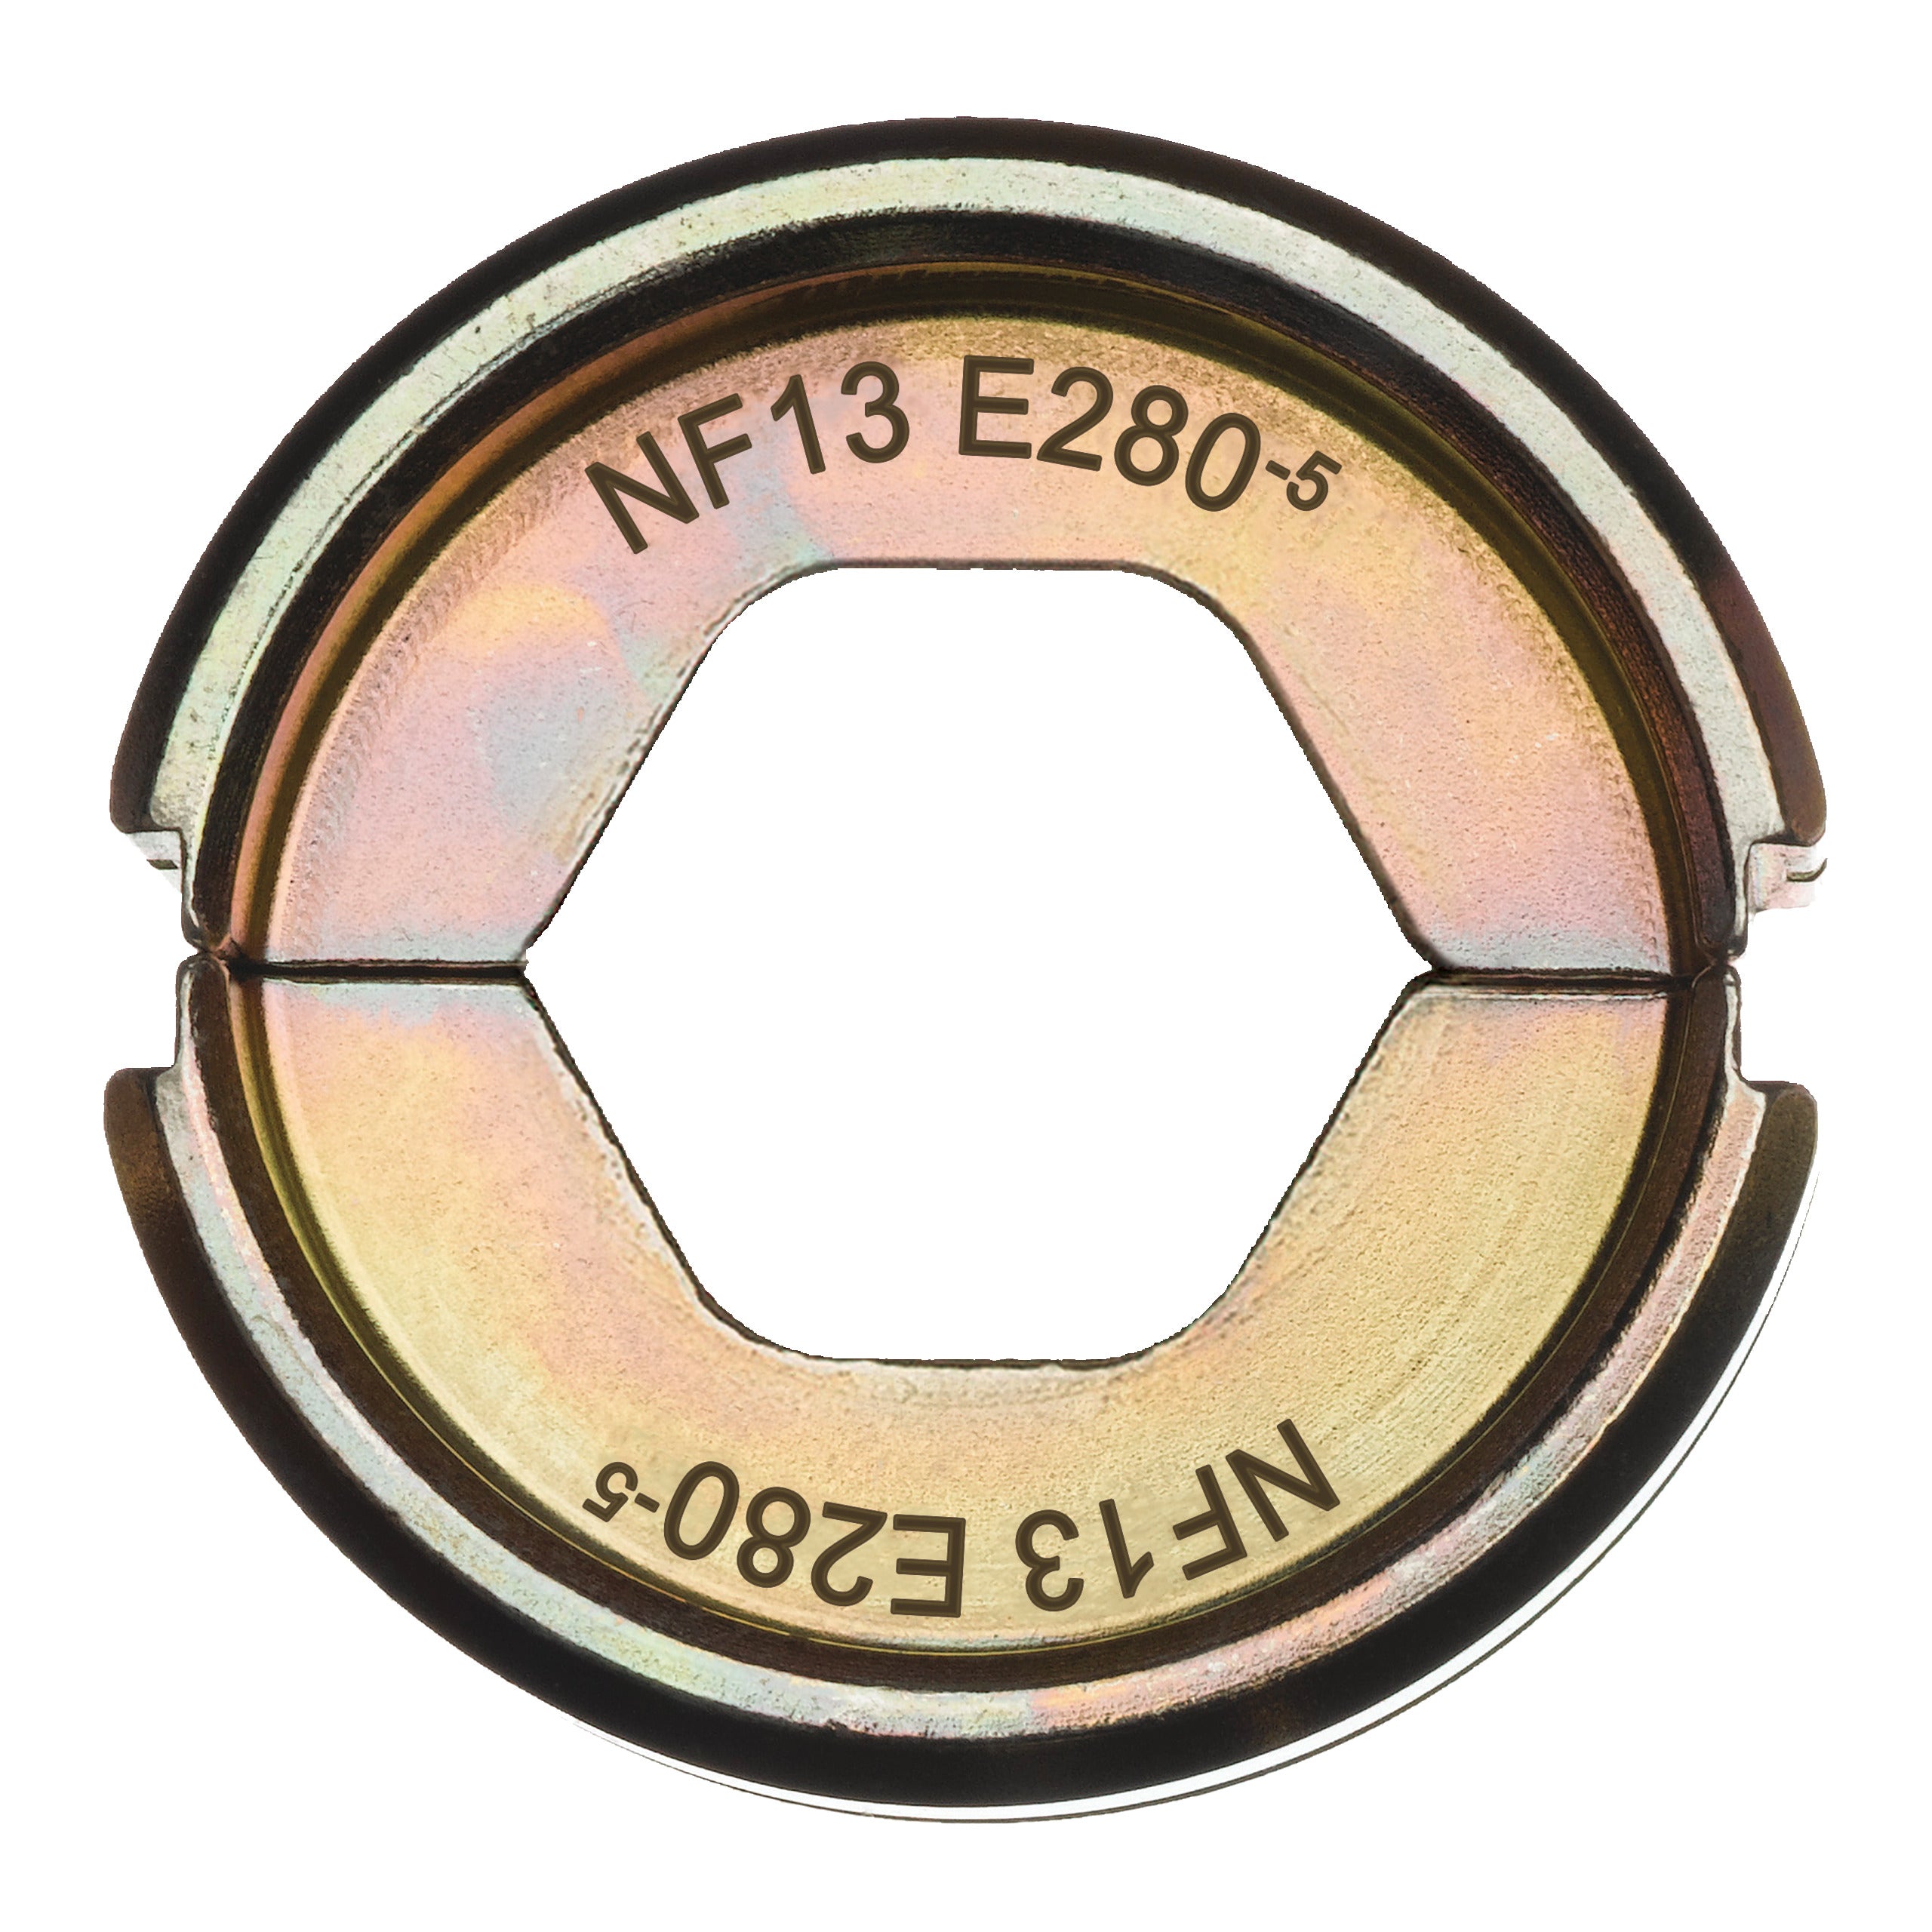 MATRICE POUR SERTISSEUSE FORCE LOGIC (ELECTRICITE) NF13 E280-5